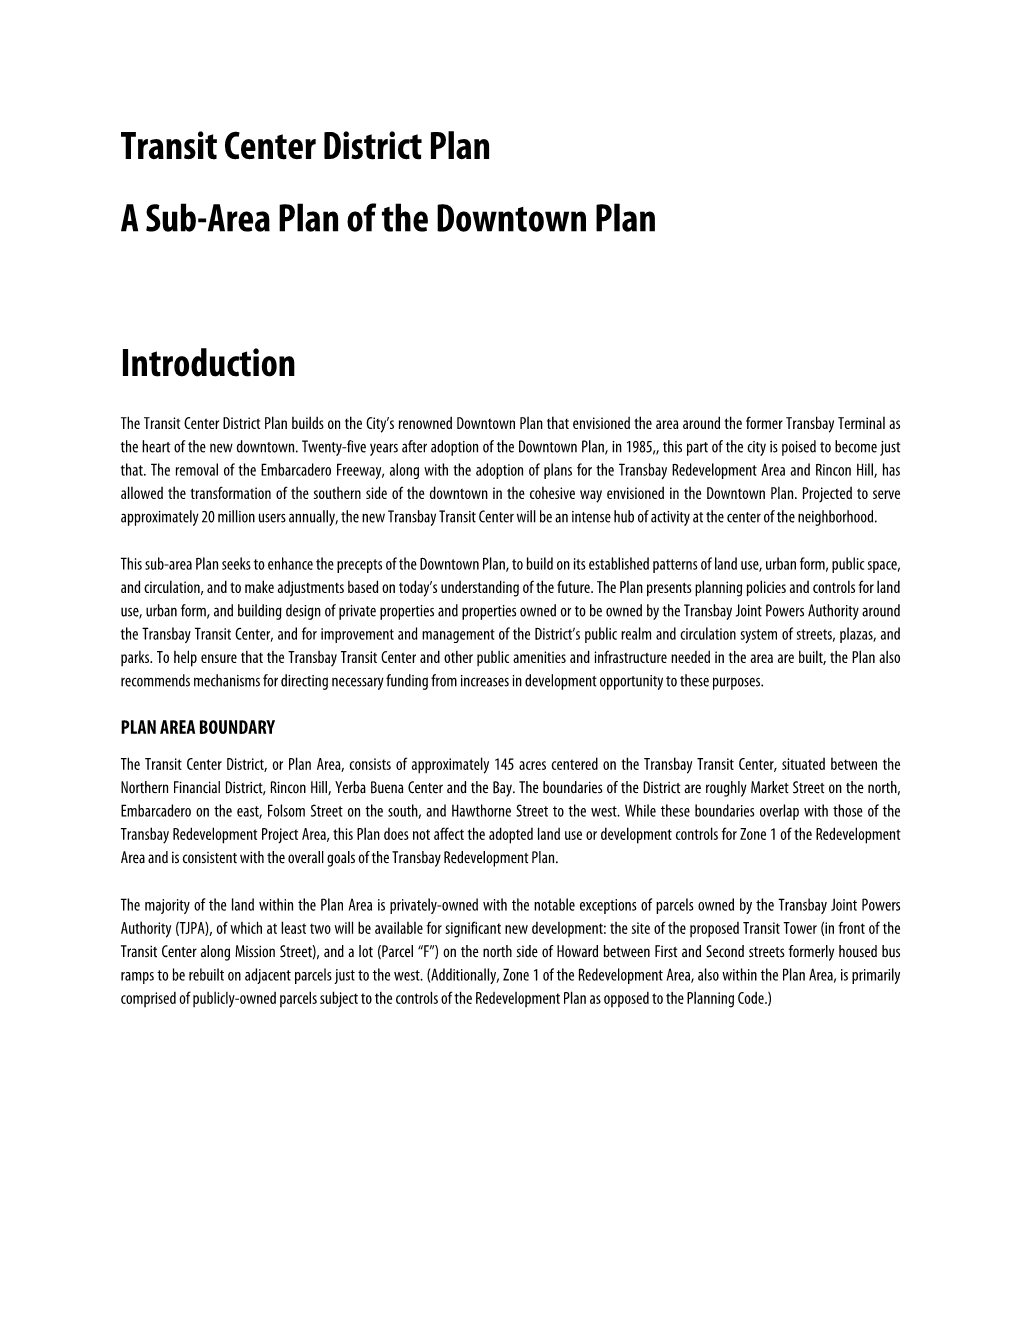 Transit Center District Plan a Sub-Area Plan of the Downtown Plan